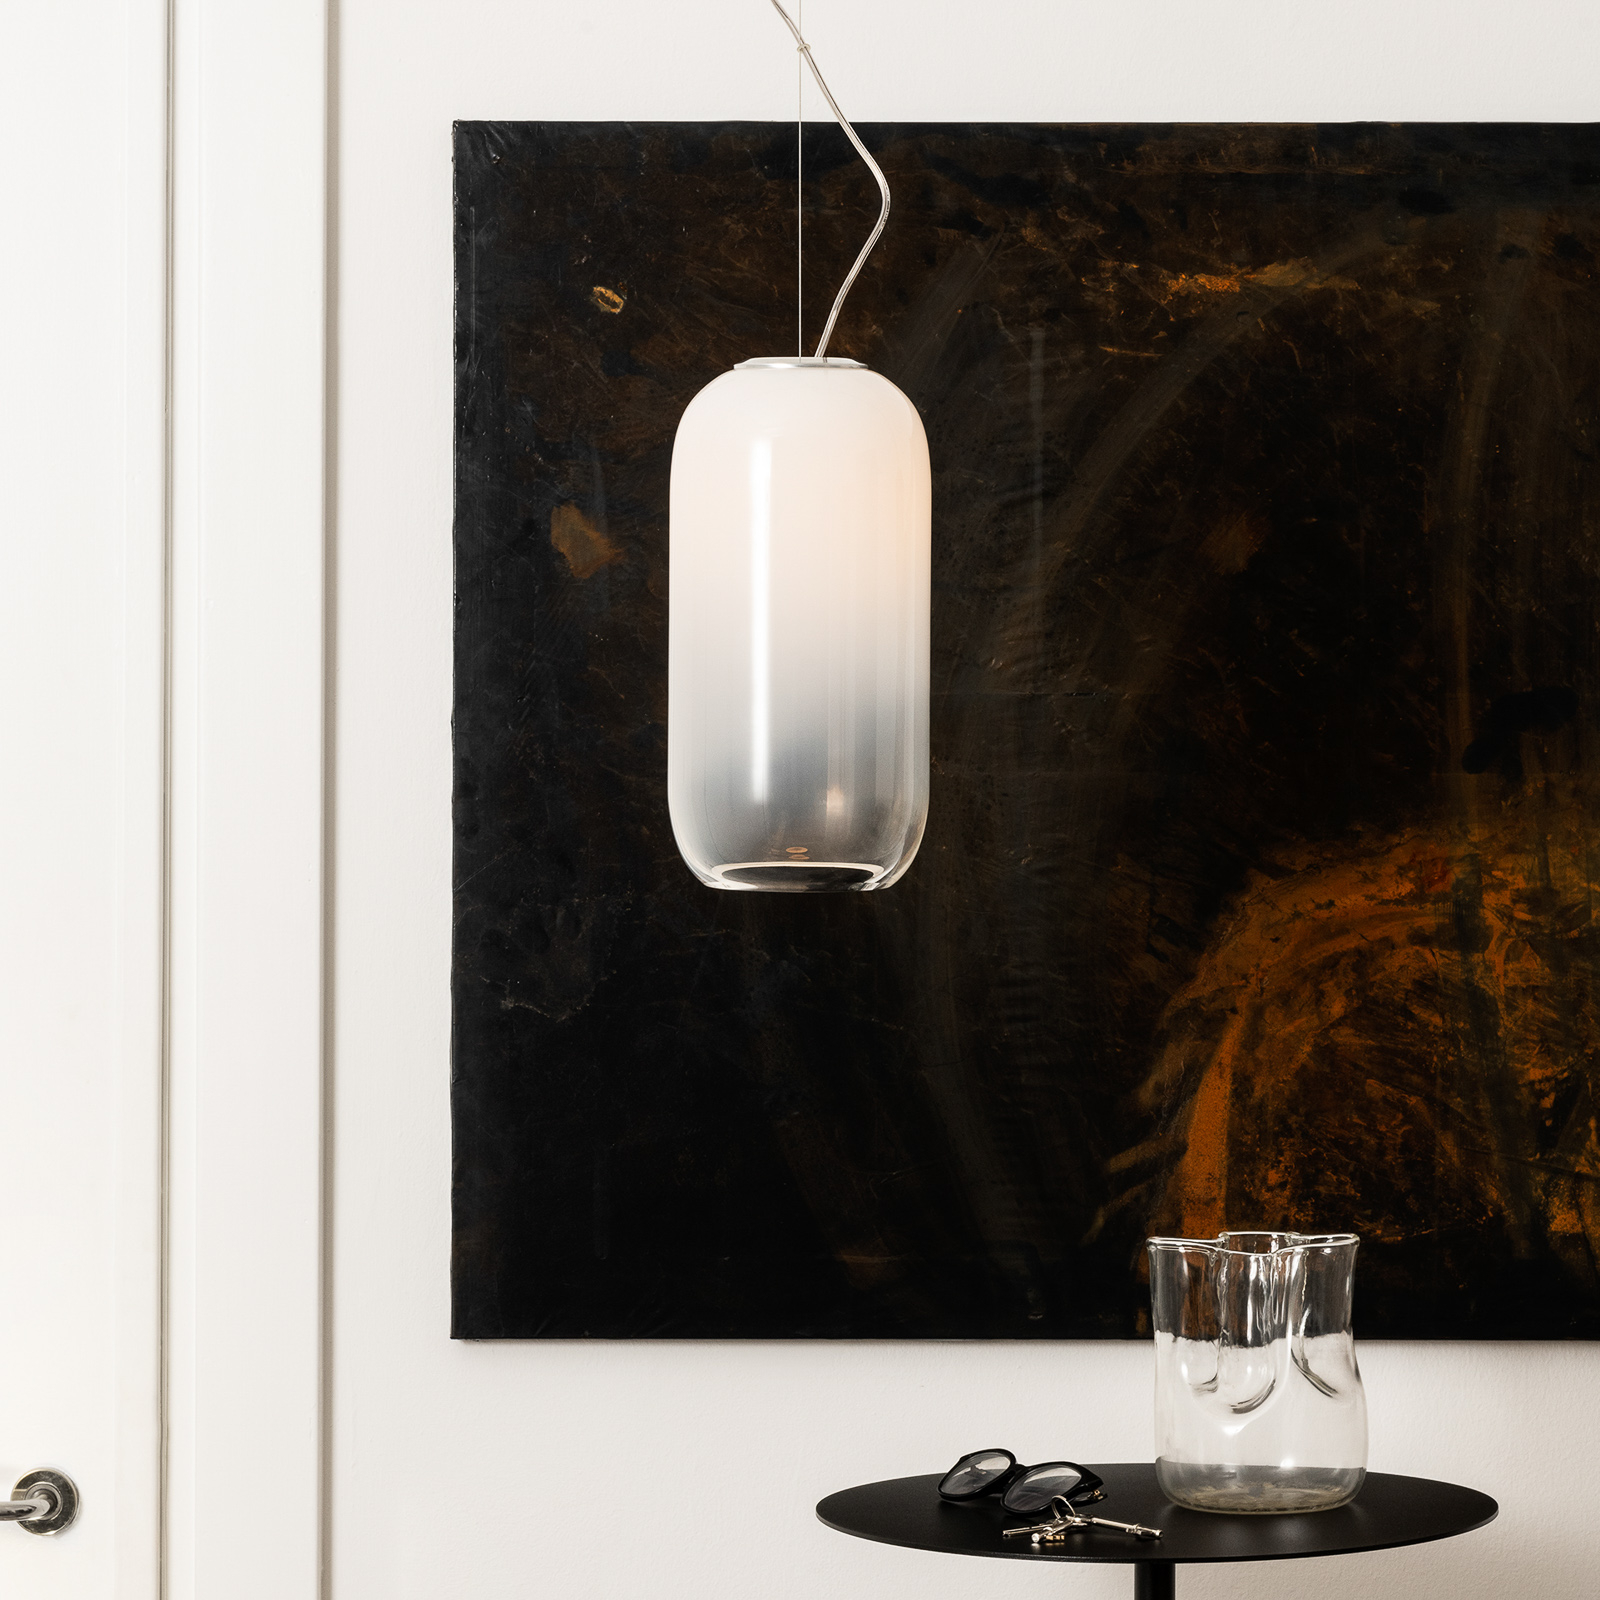 Artemide Gople glas-hanglamp, wit/zilver